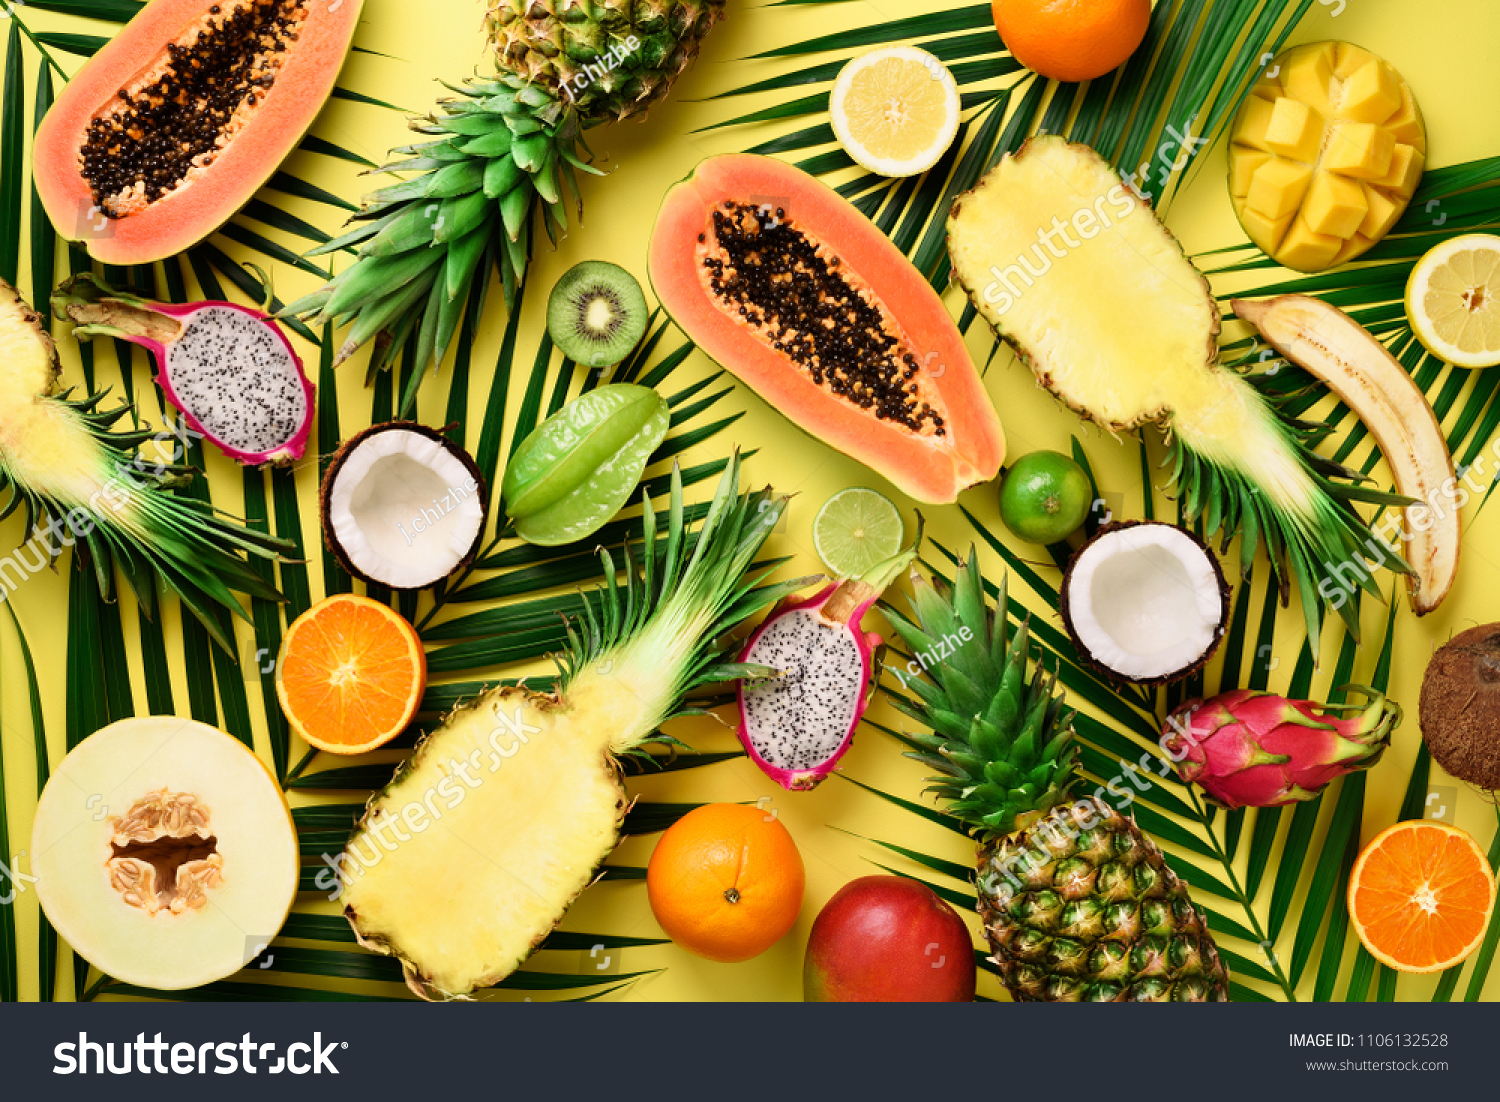 Exotic fruits and tropical palm leaves on pastel yellow background - papaya, mango, pineapple, banana, carambola, dragon fruit, kiwi, lemon, orange, melon, coconut, lime. Top view #1106132528